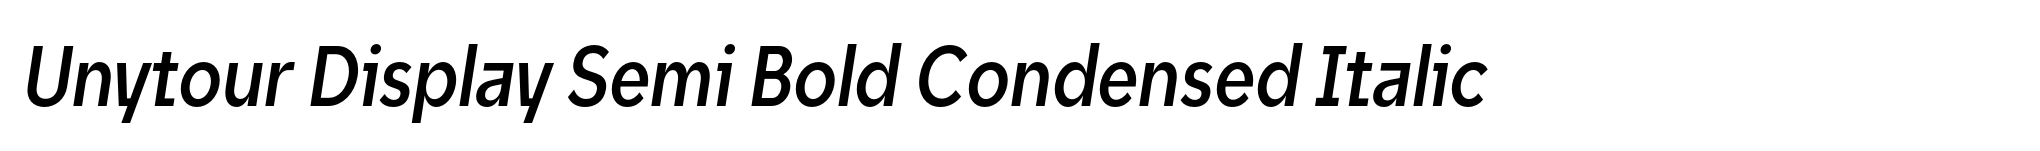 Unytour Display Semi Bold Condensed Italic image